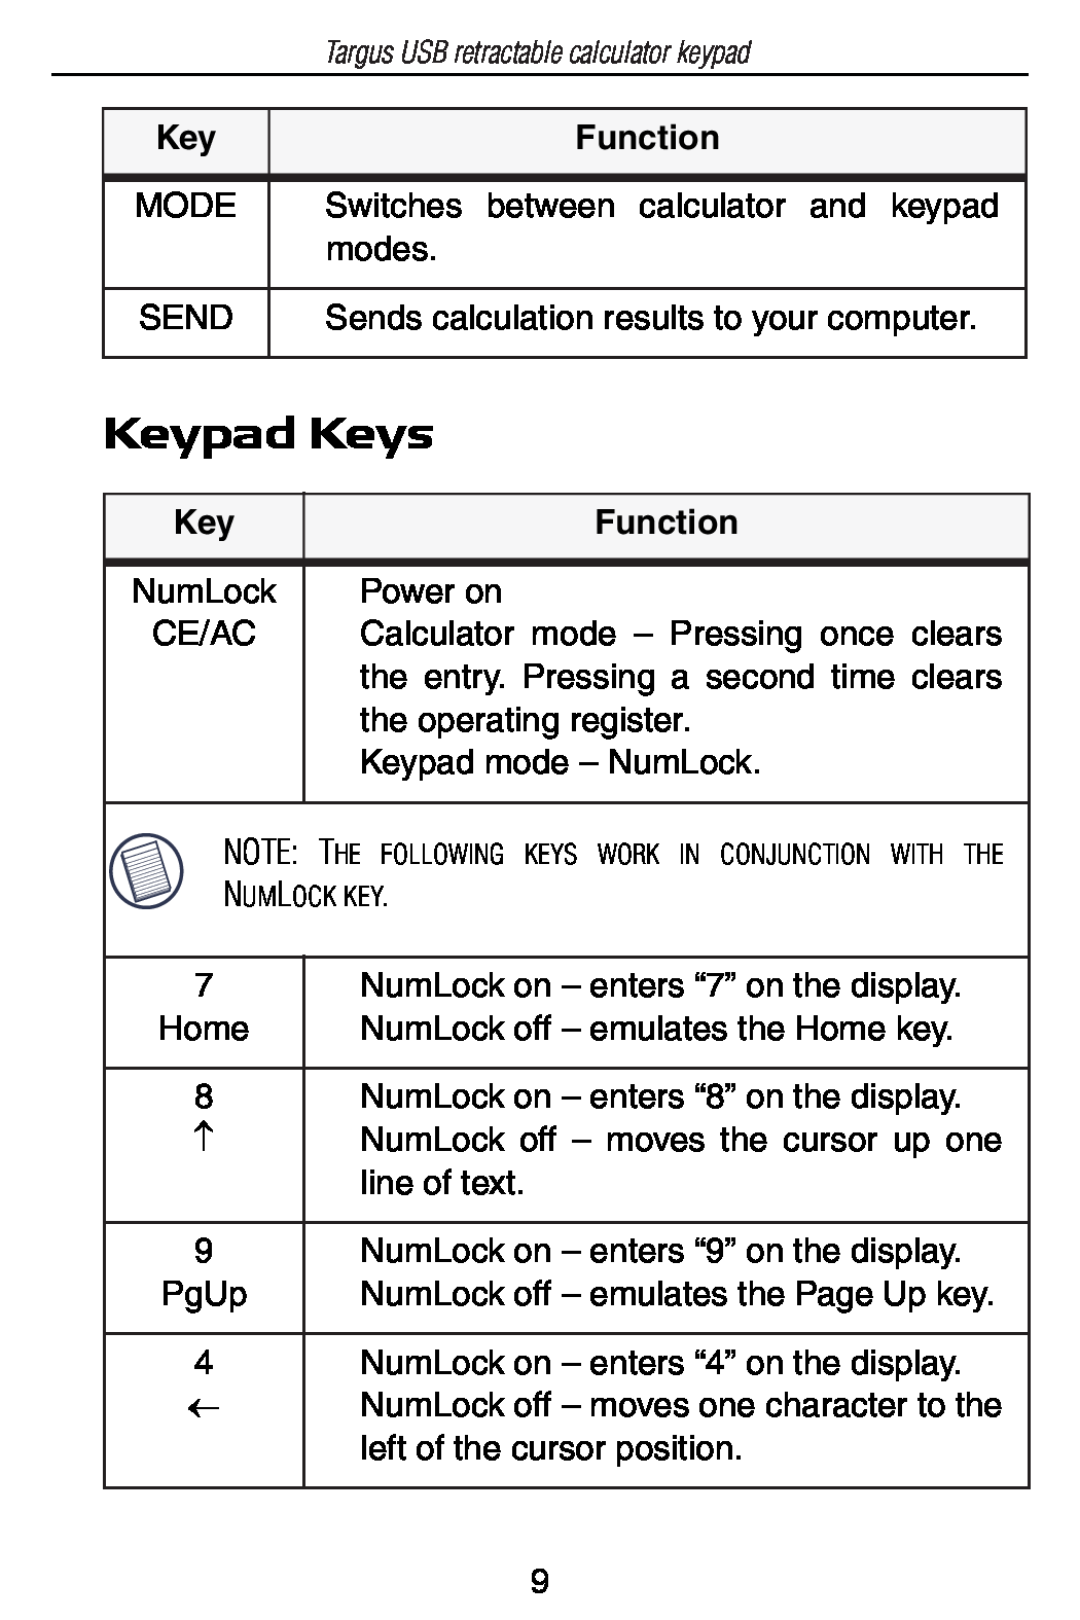 Targus USB Retractable Calculator Keypad specifications Keypad Keys, Function 